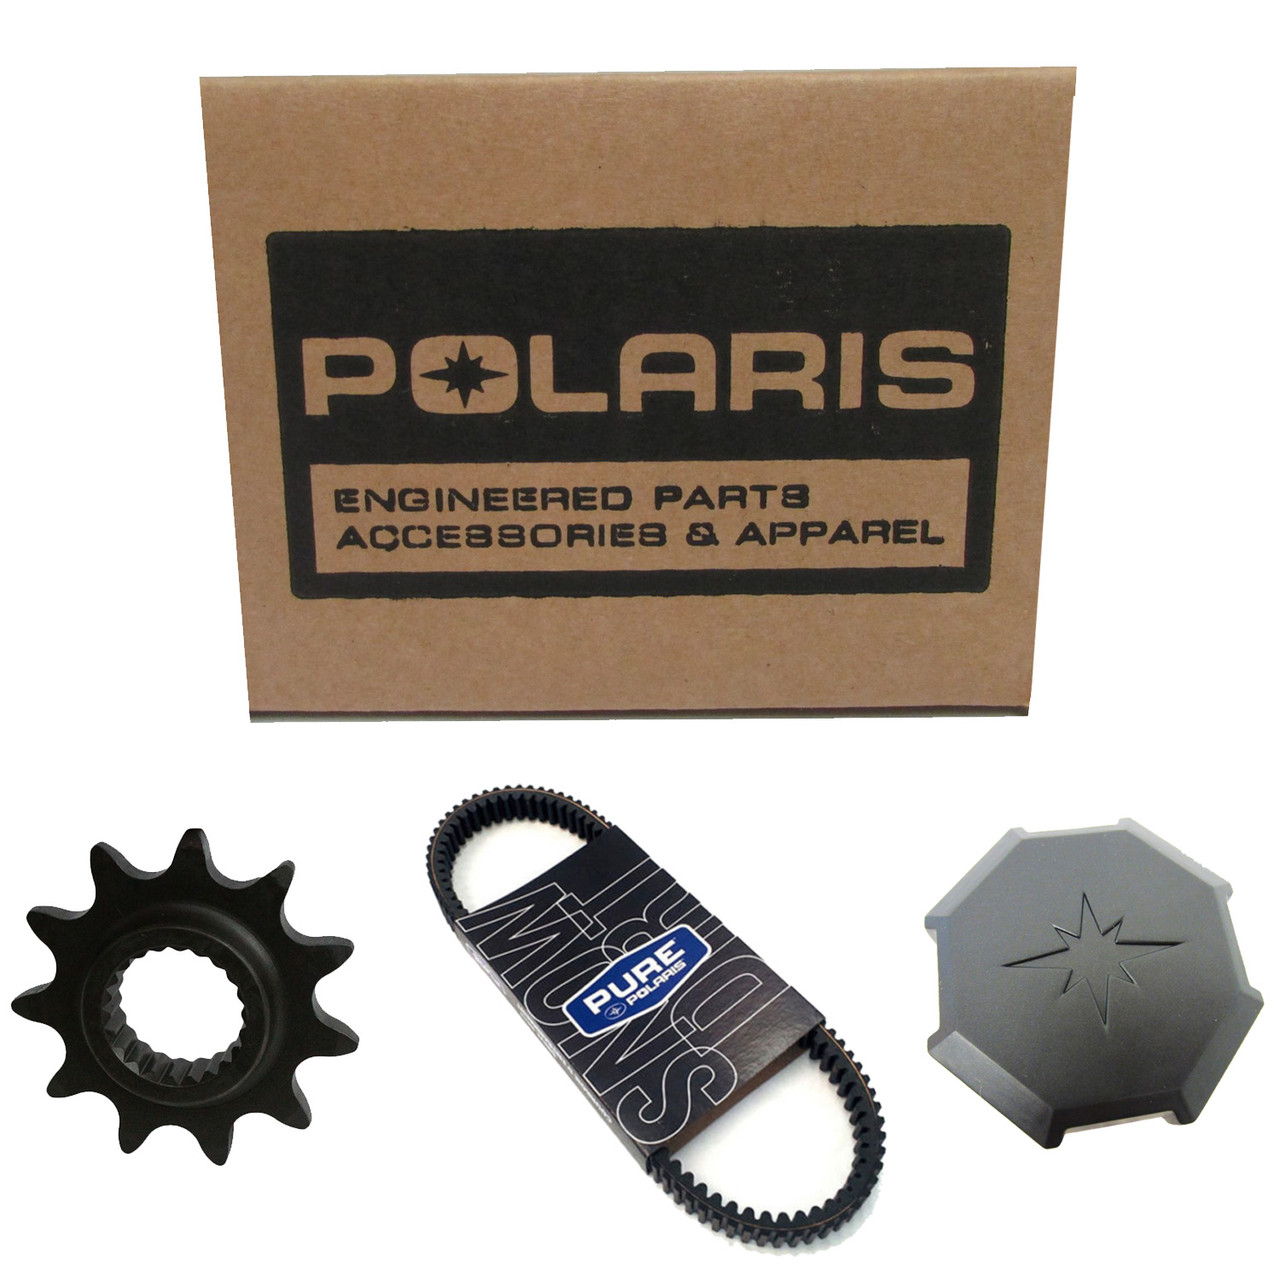 Polaris New OEM Revc-Lic Plate Frame, Script, N51300063